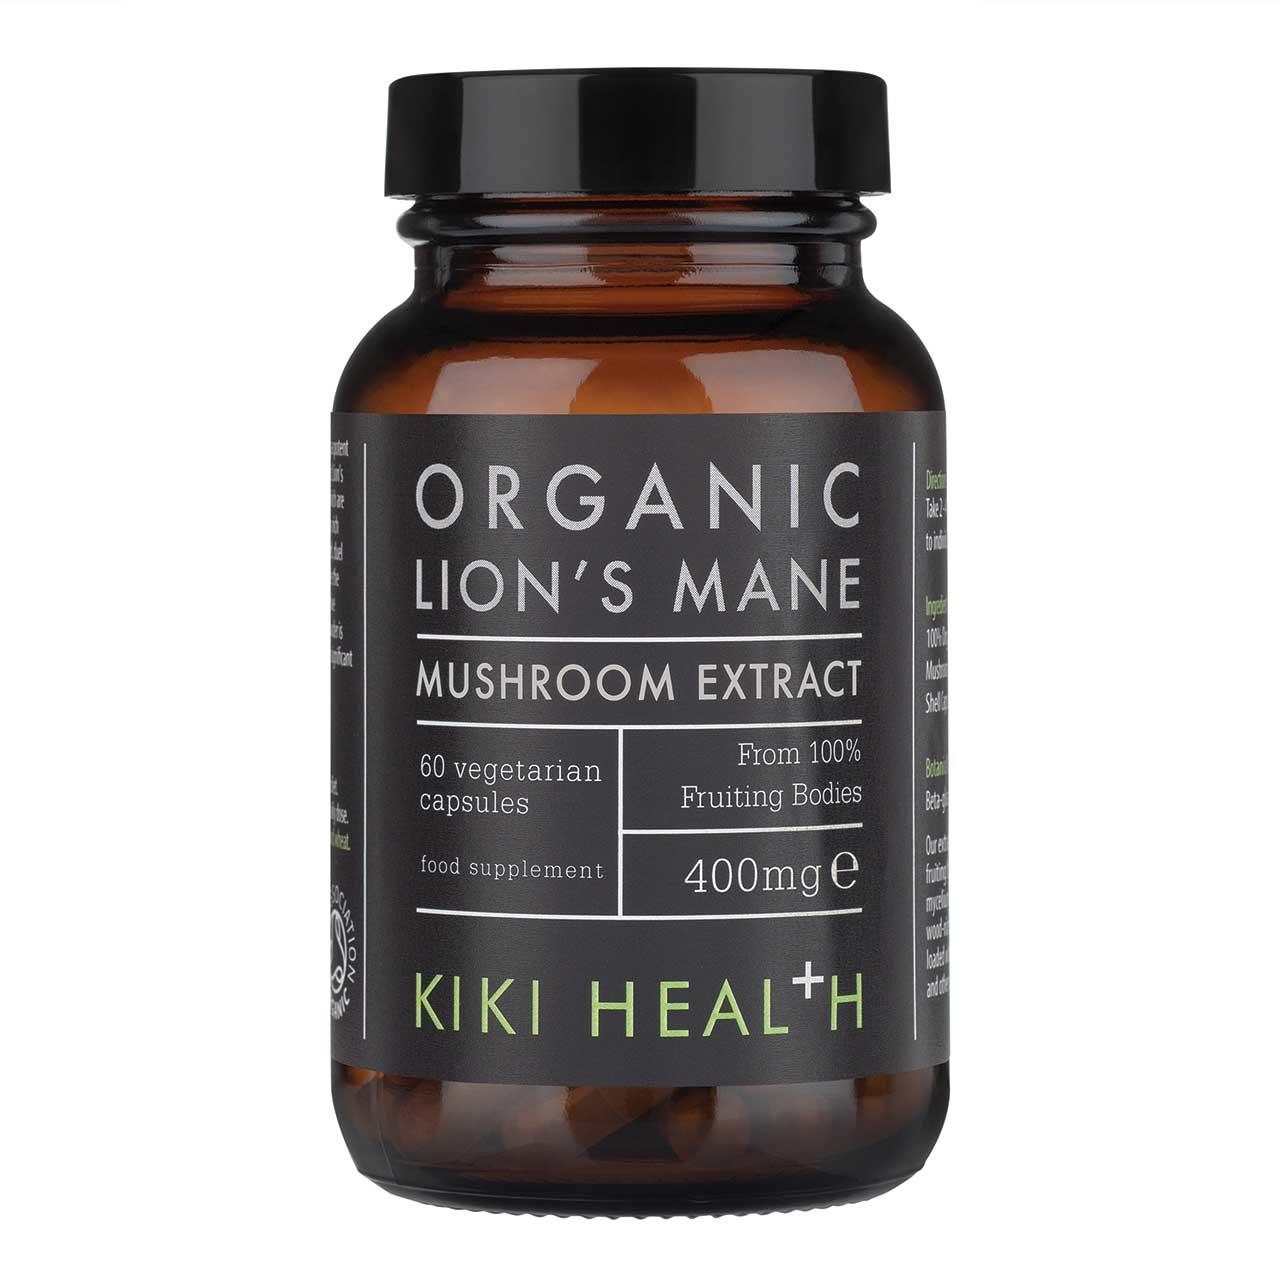 mane mushroom organic extract lion kiki health vegicaps lionsmane lions supplements manes strawberry